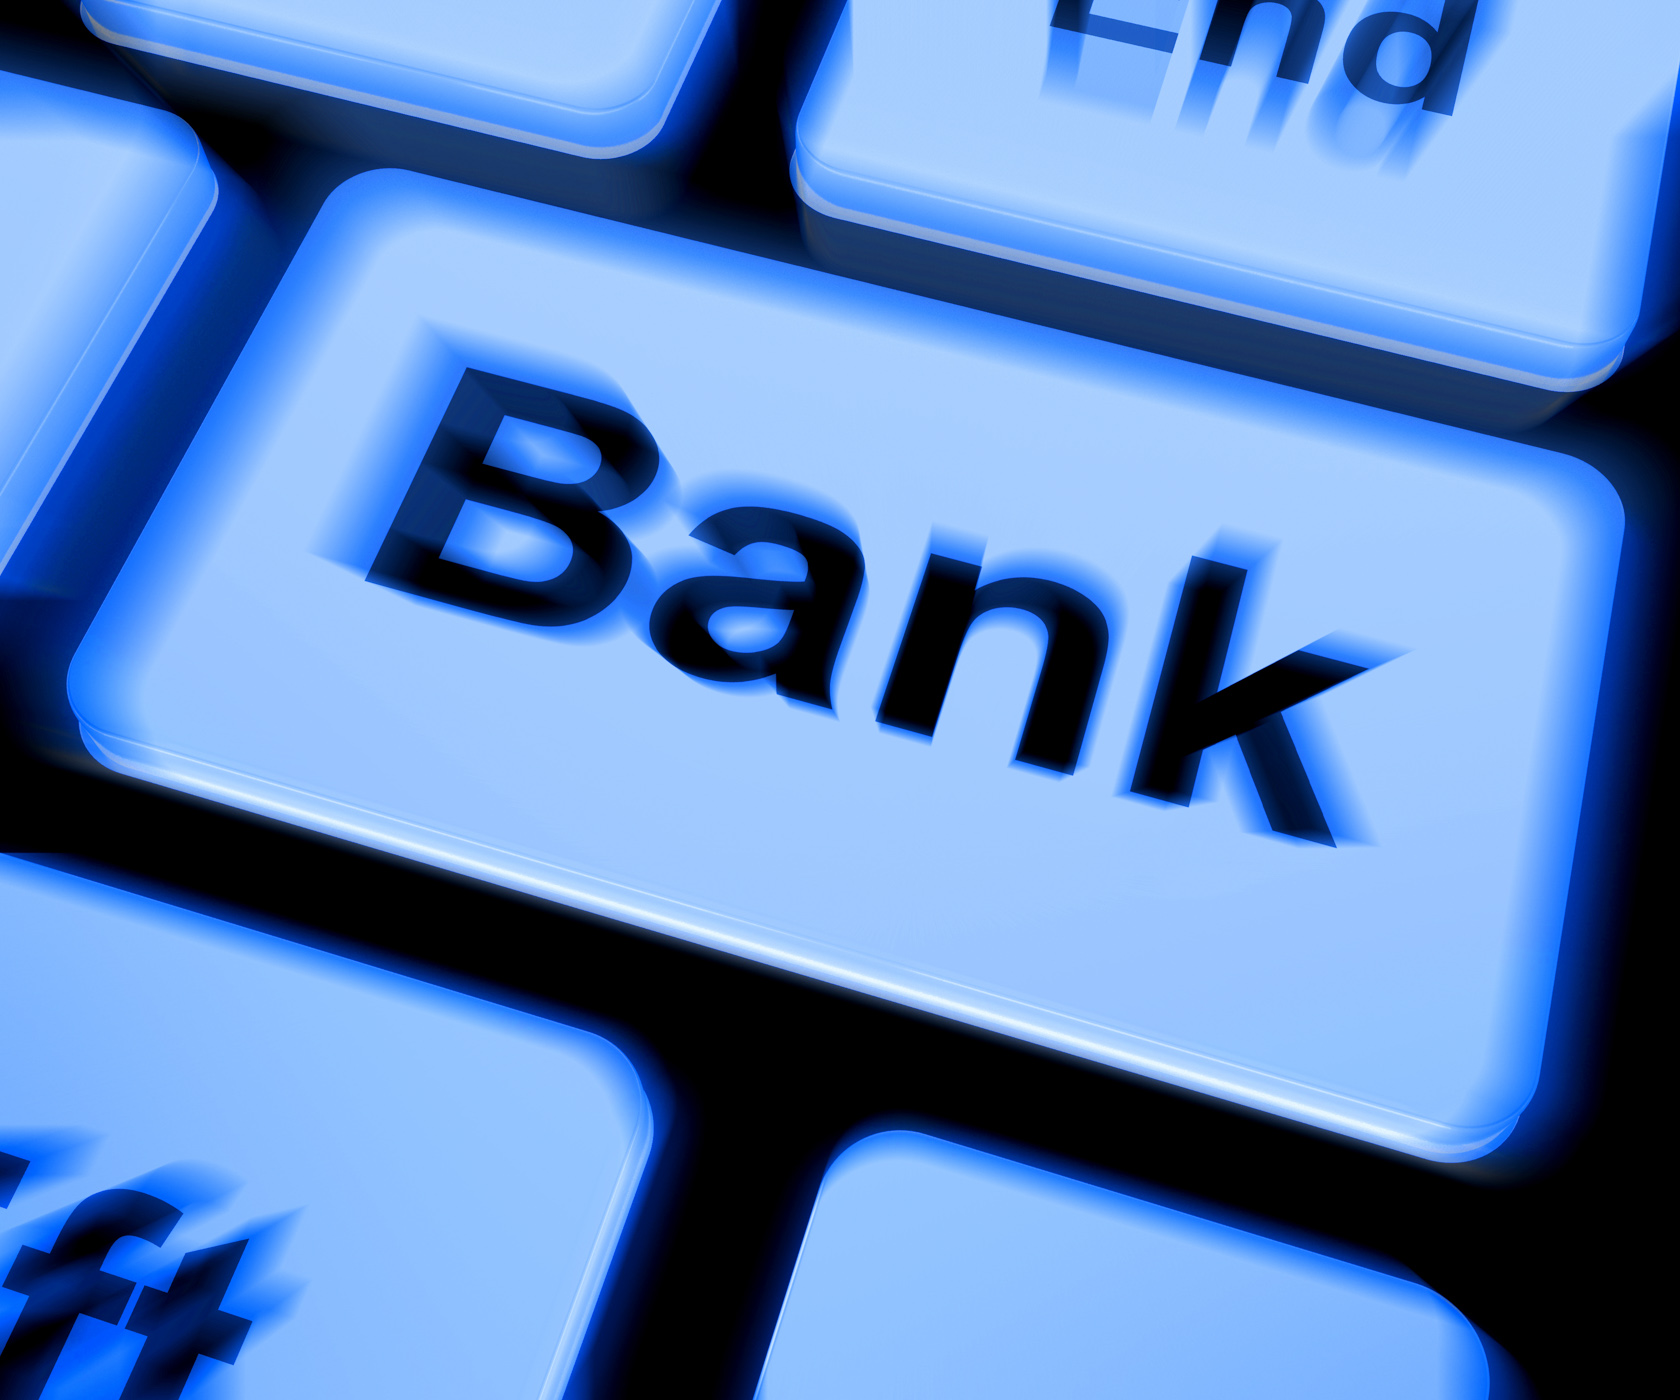 Bank keyboard shows online or internet banking photo